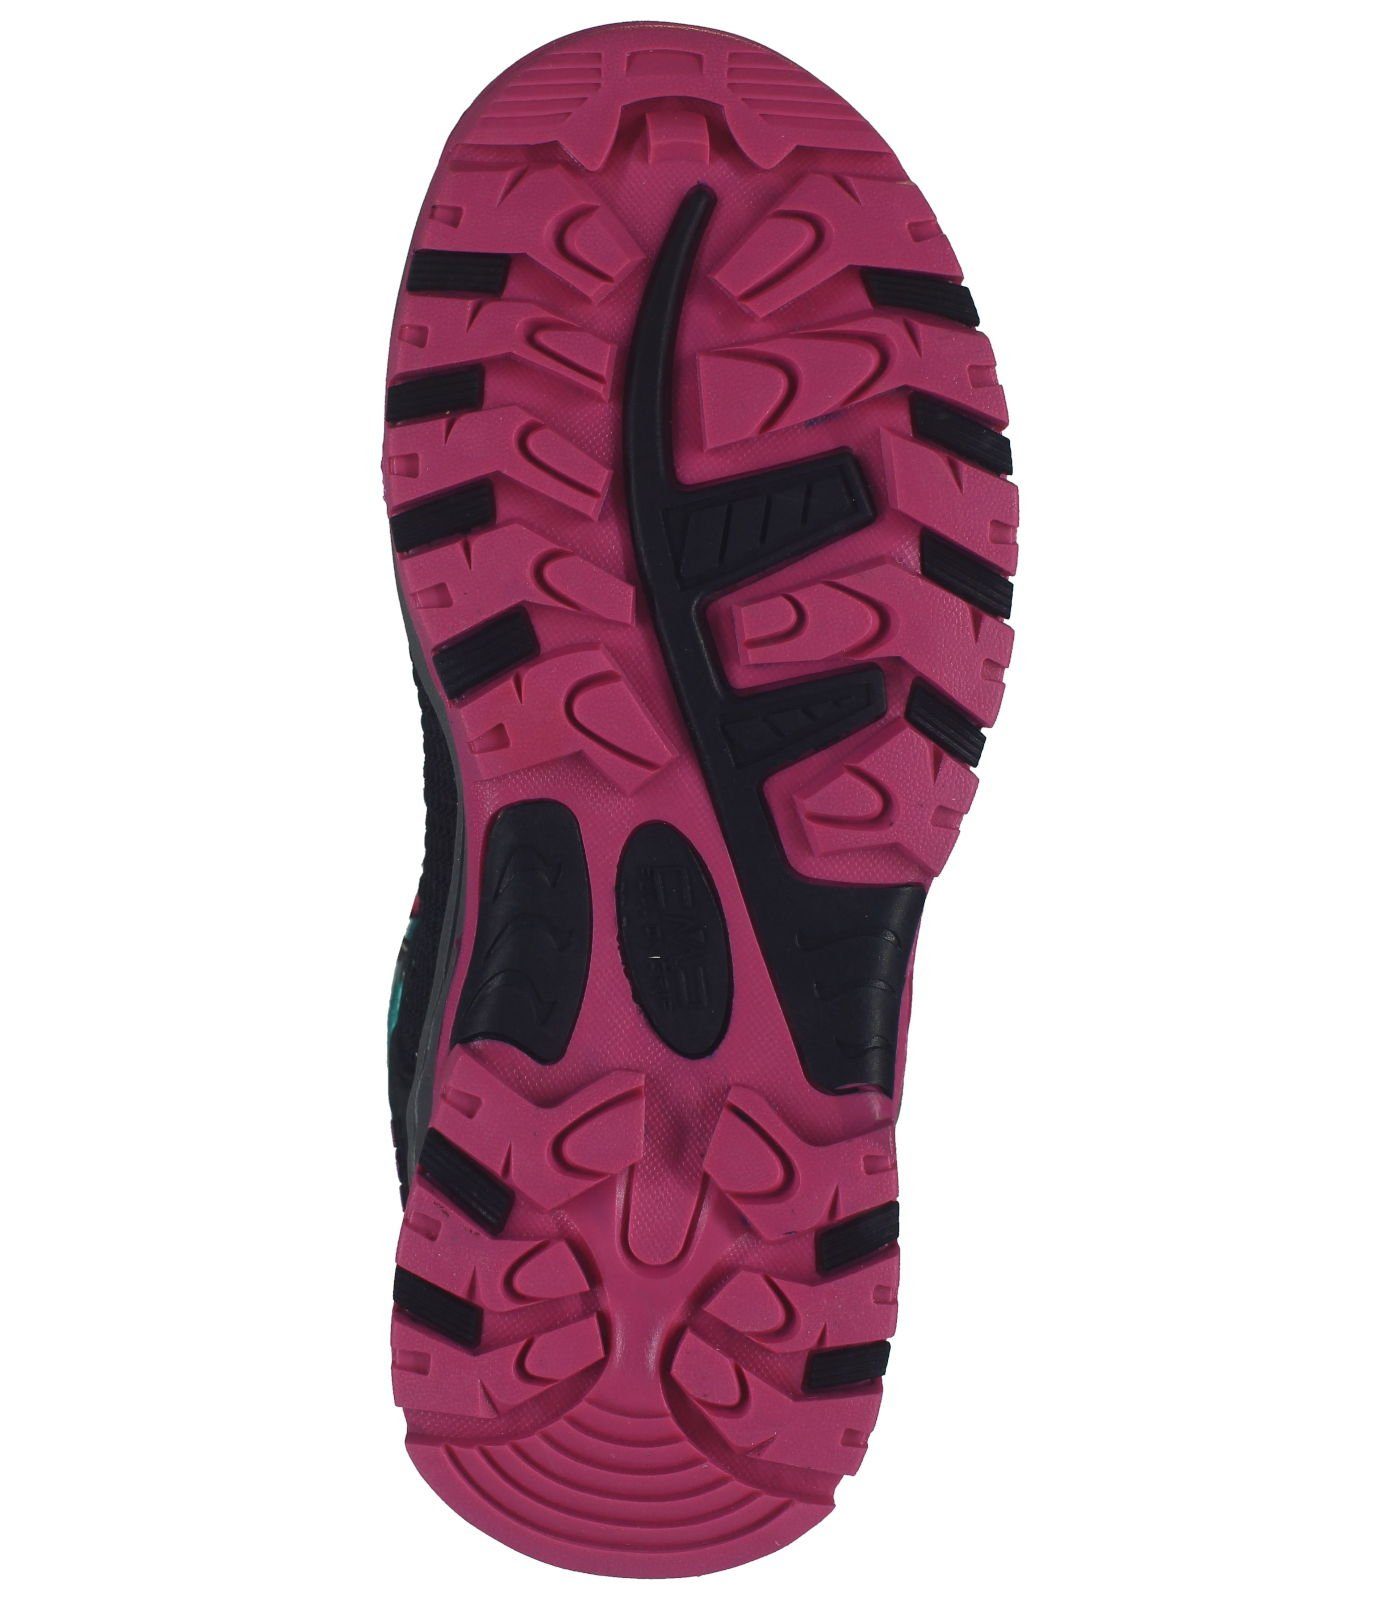 Boots Leder/Textil Winterstiefel Schwarz Pink CMP